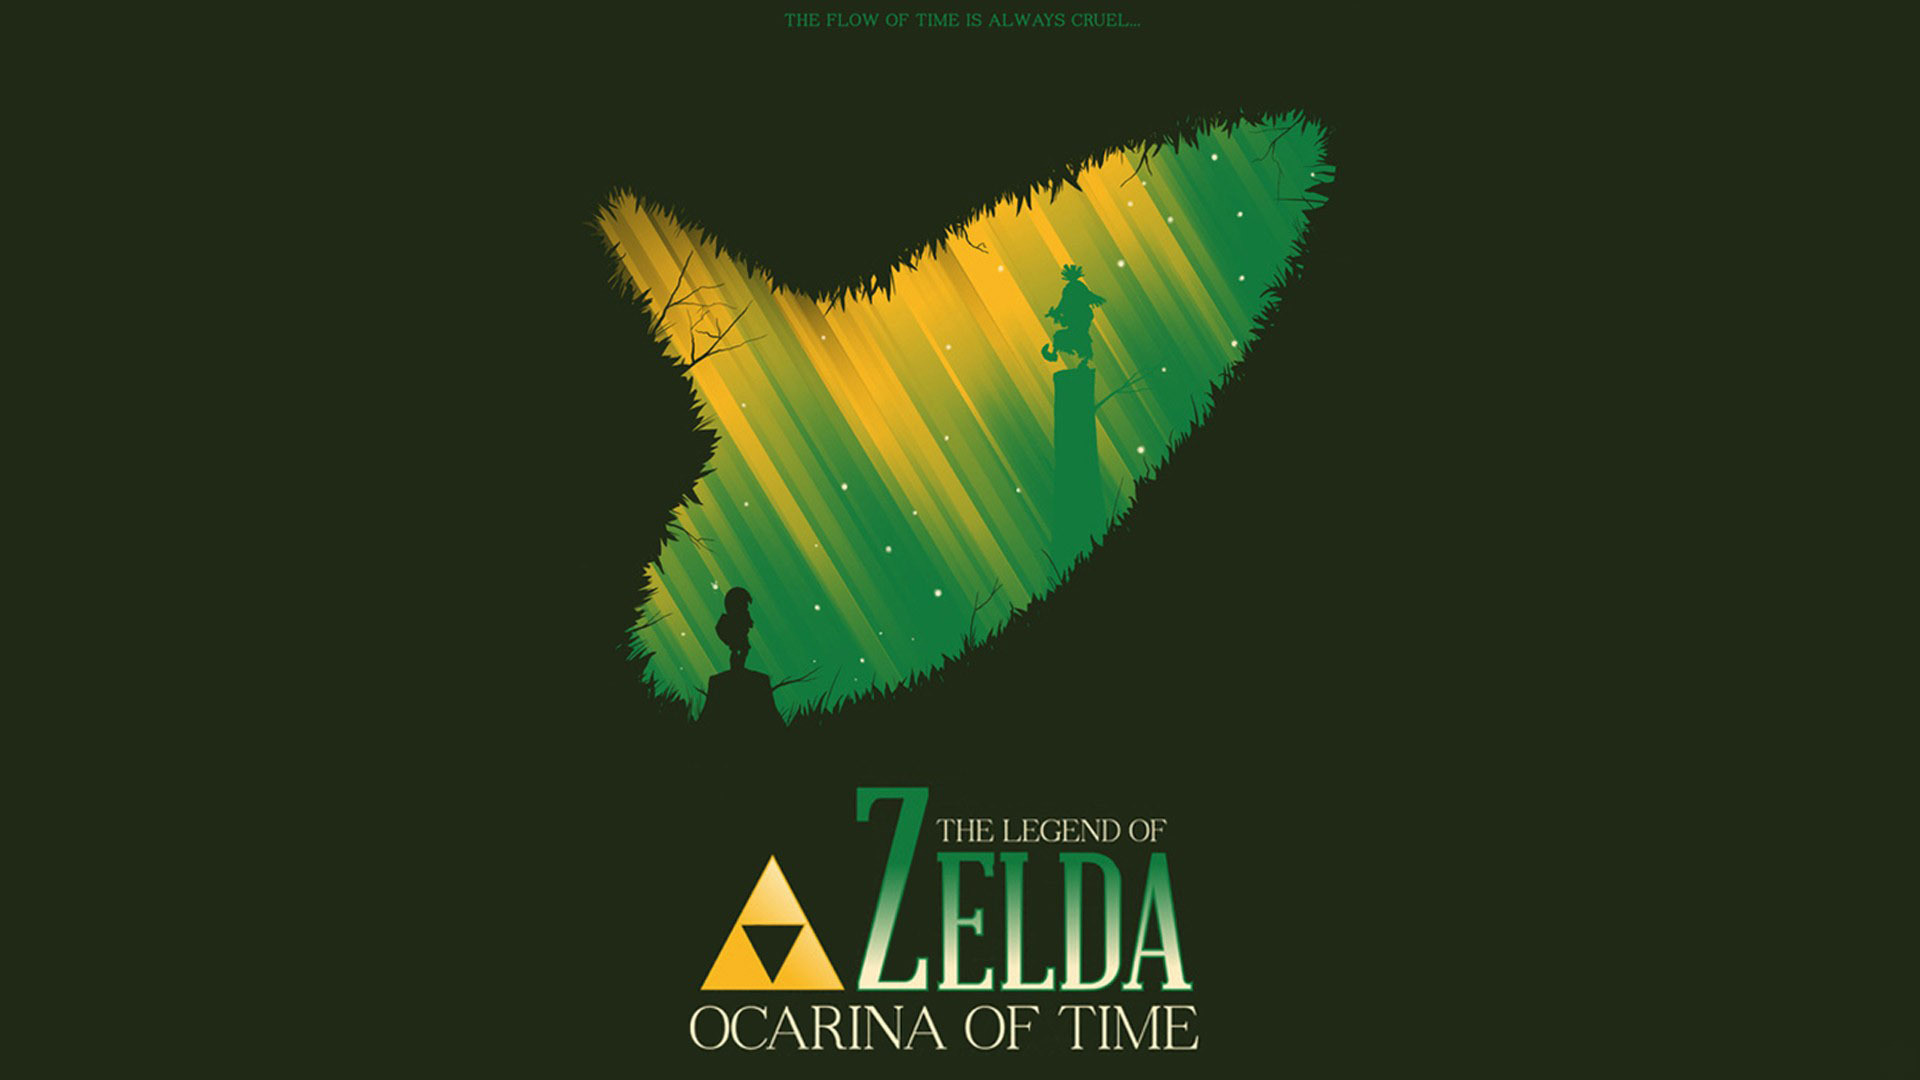 The Legend of Zelda   Ocarina of Time wallpaper   1024149 1920x1080